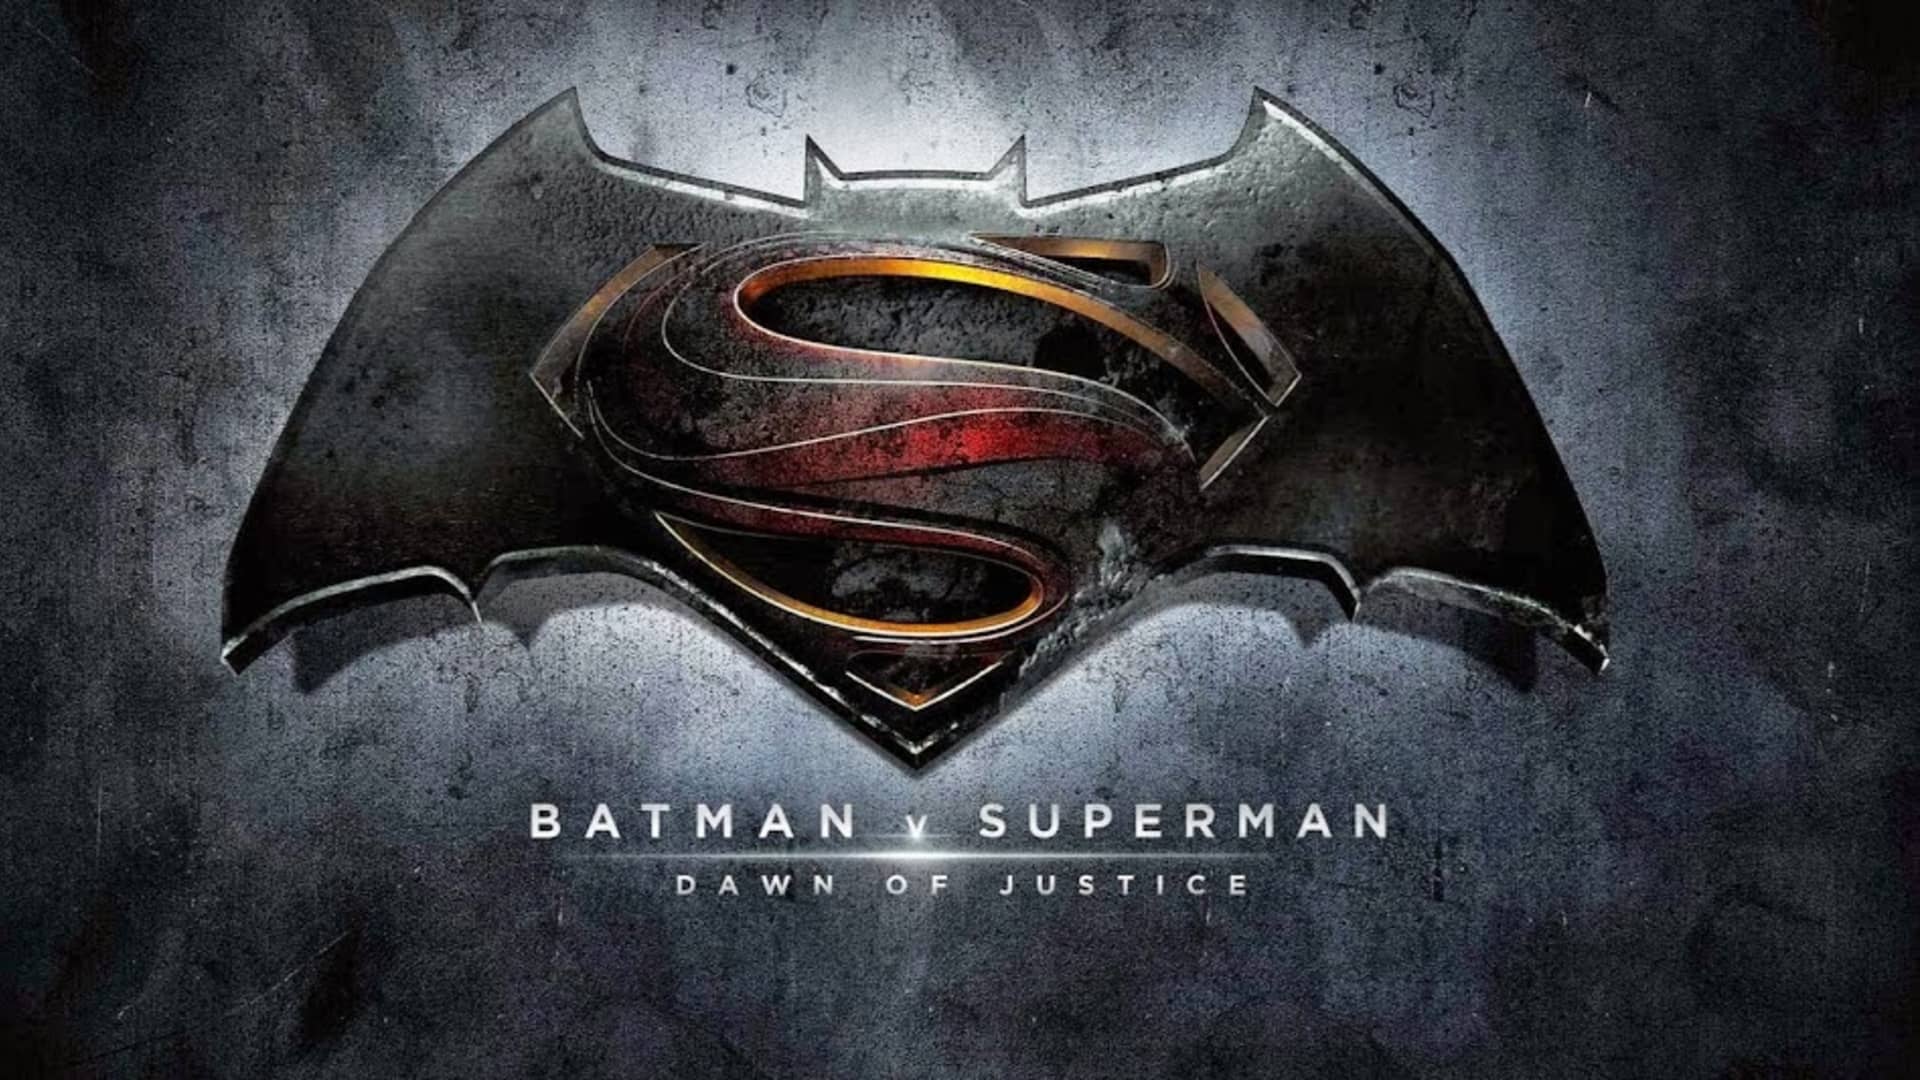 Batman vs. Superman may not boost Warner Bros.